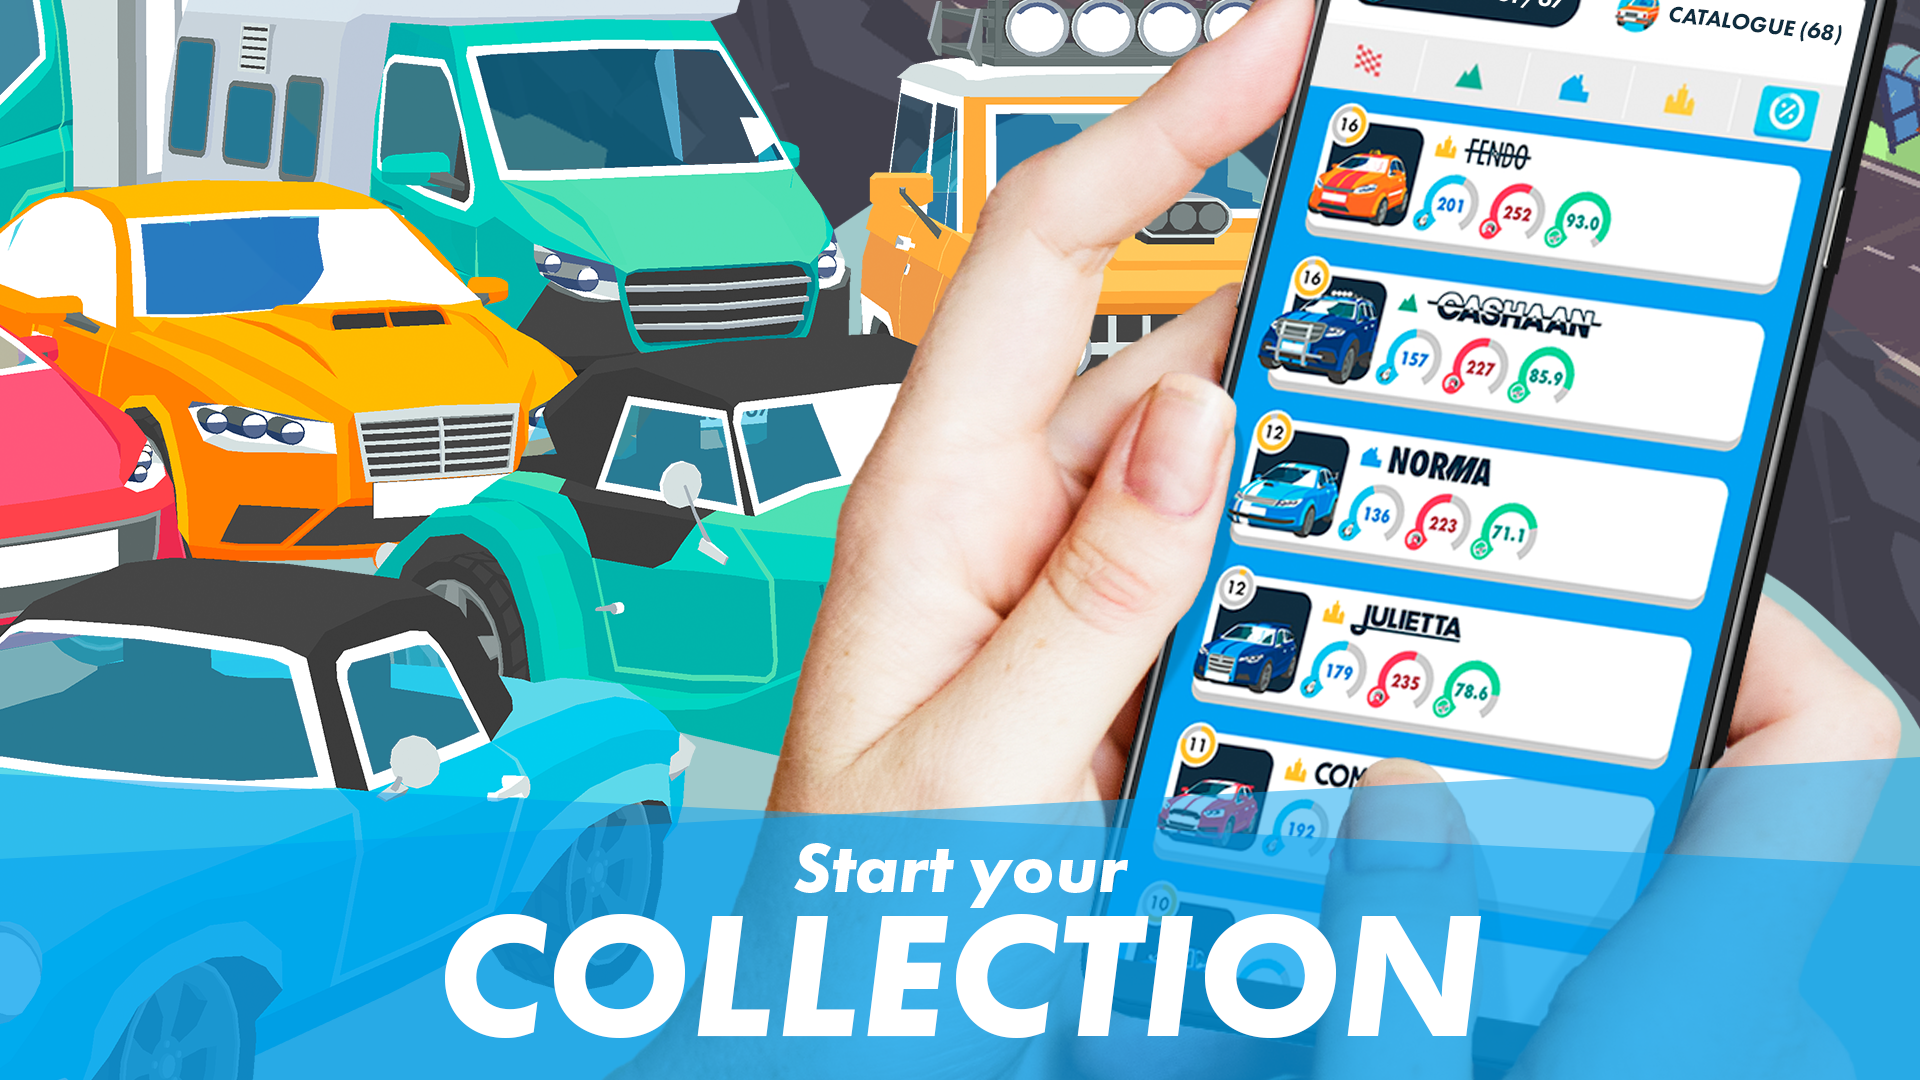 SpotRacers — Car Racing Game screenshot game